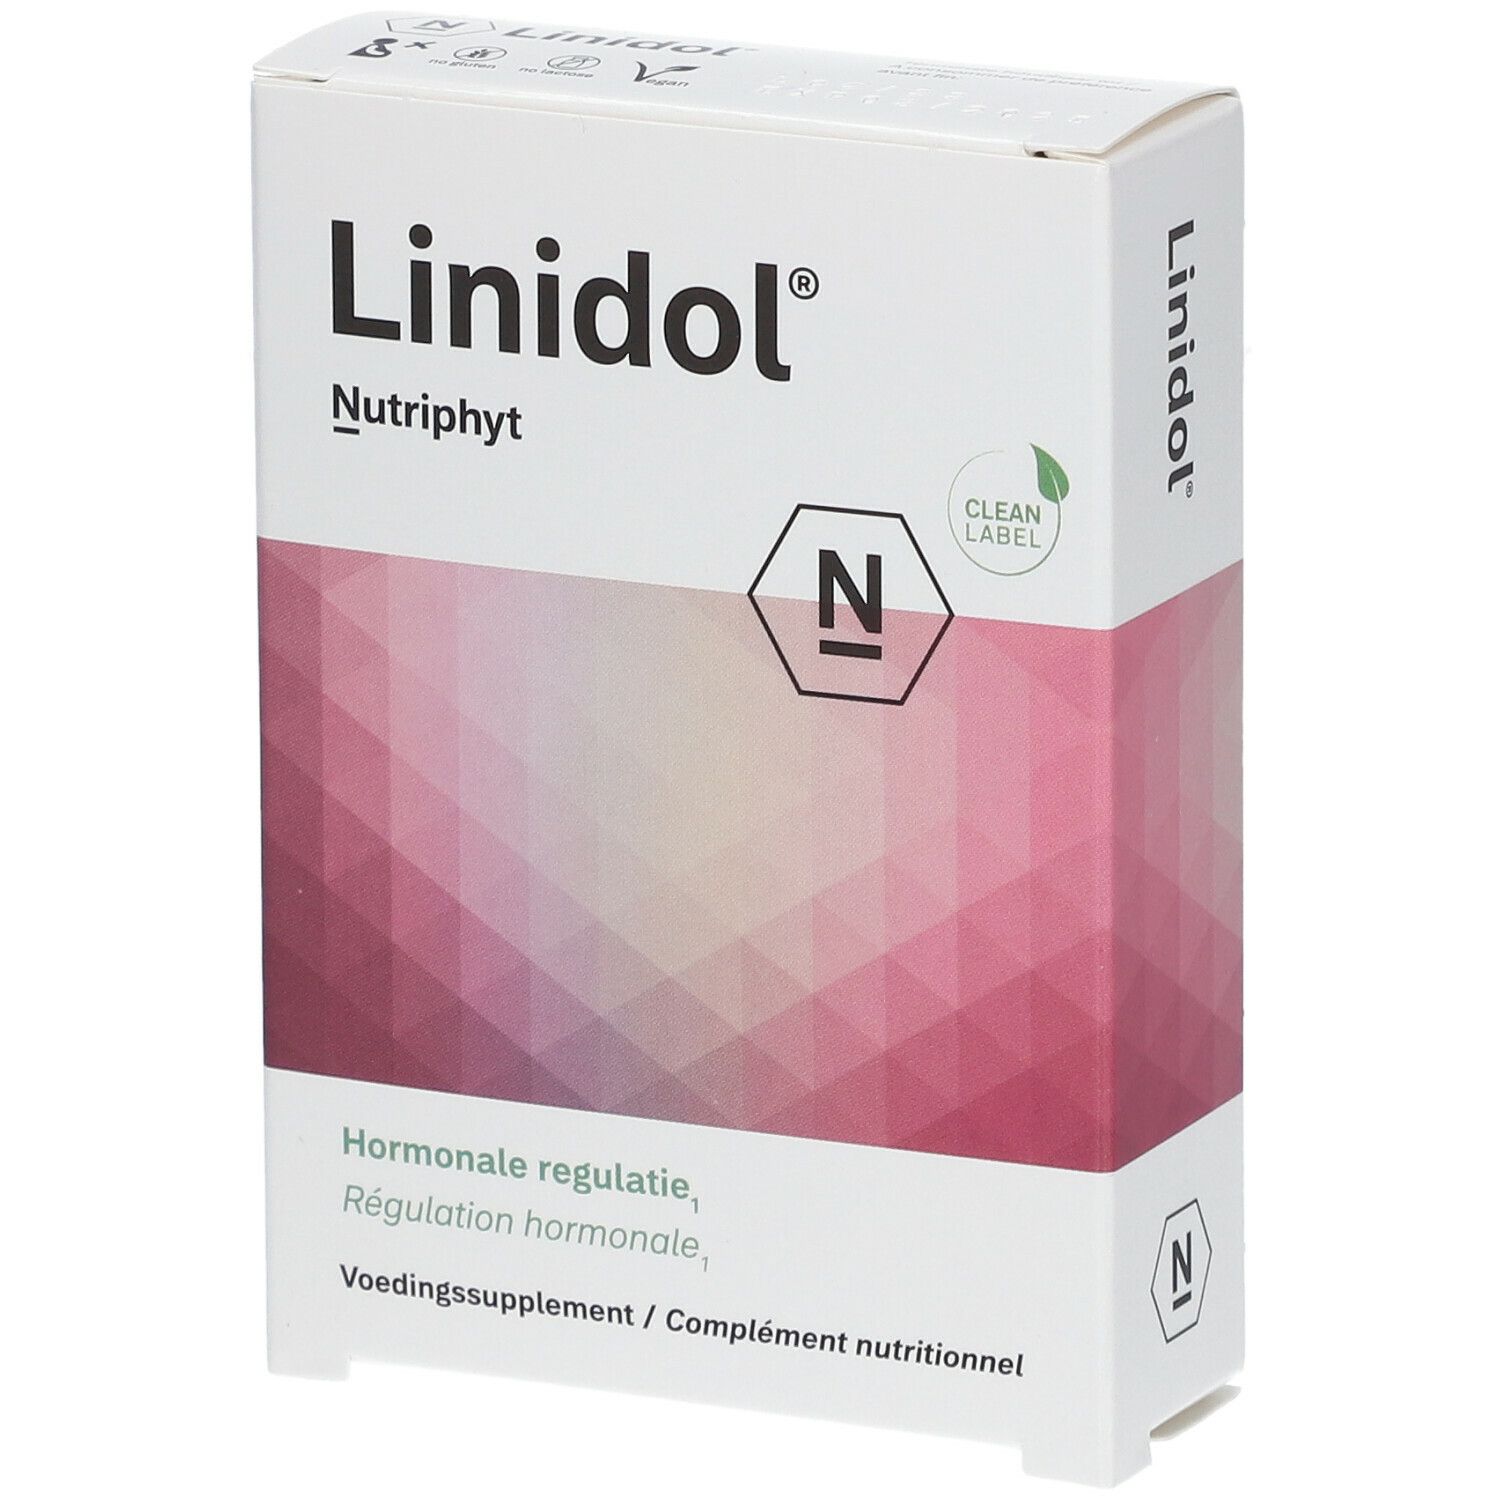 Image of Linidol® Nutriphyt